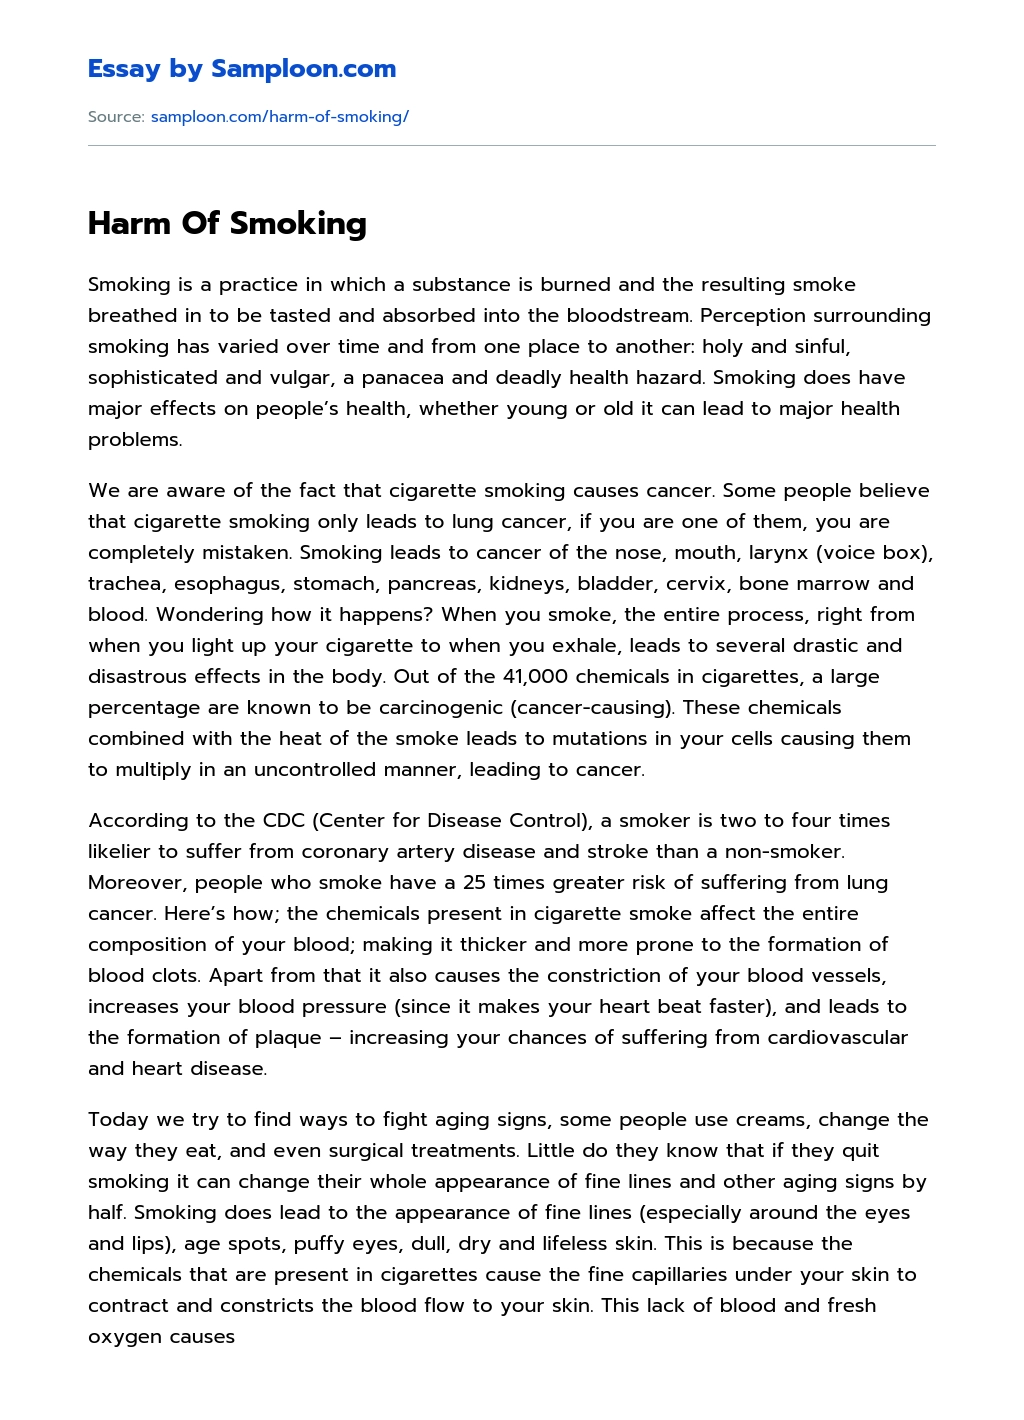 Harm Of Smoking essay